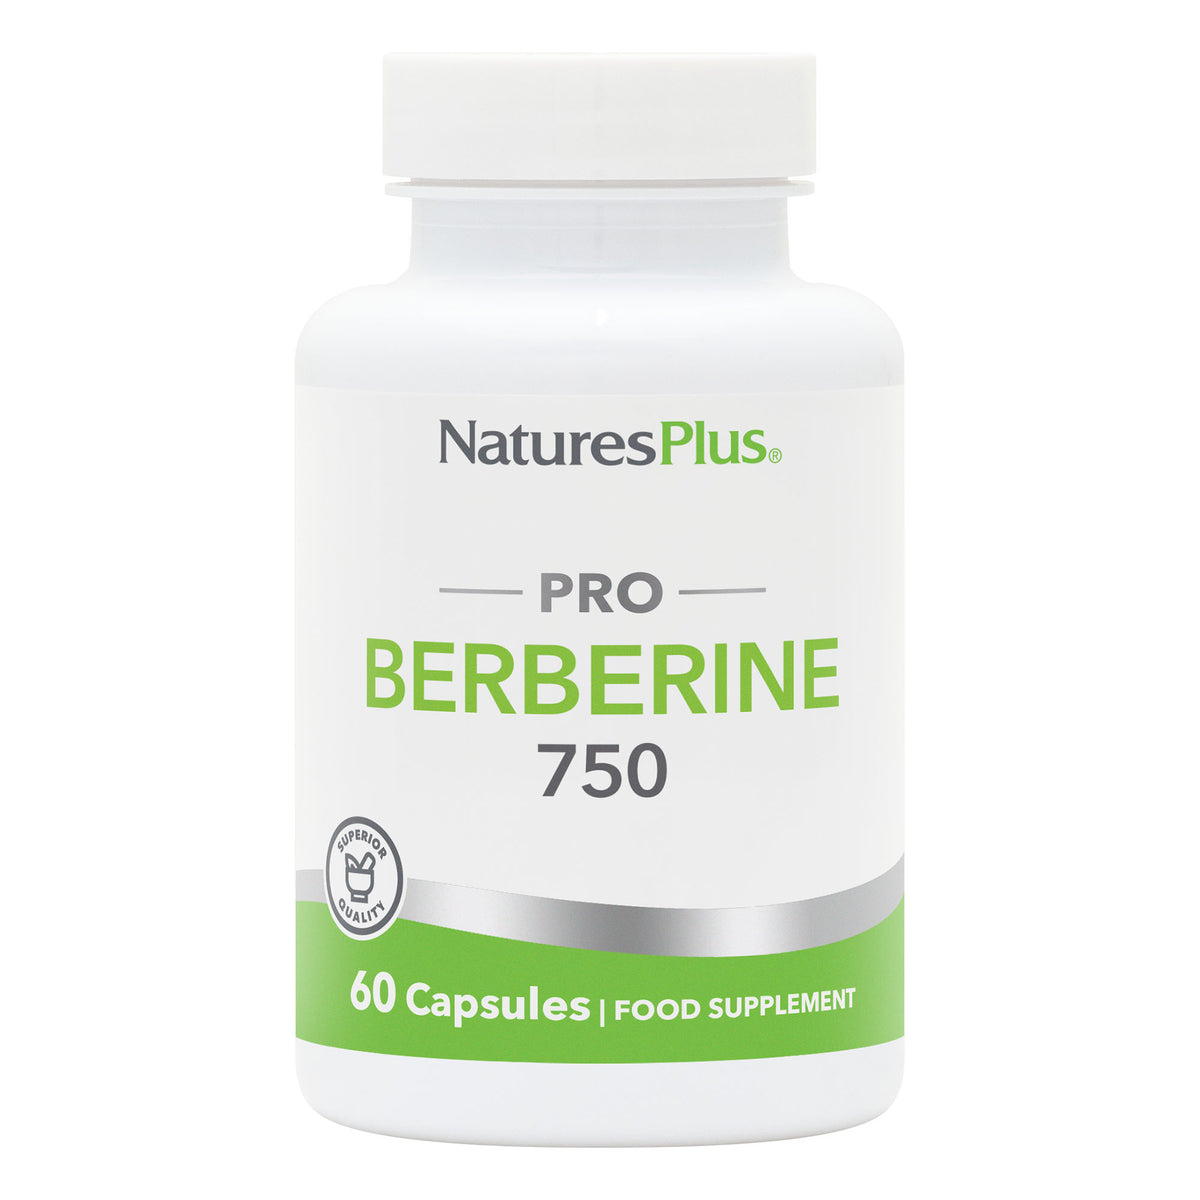 product image of NaturesPlus PRO Berberine 750 MG containing NaturesPlus PRO Berberine 750 MG